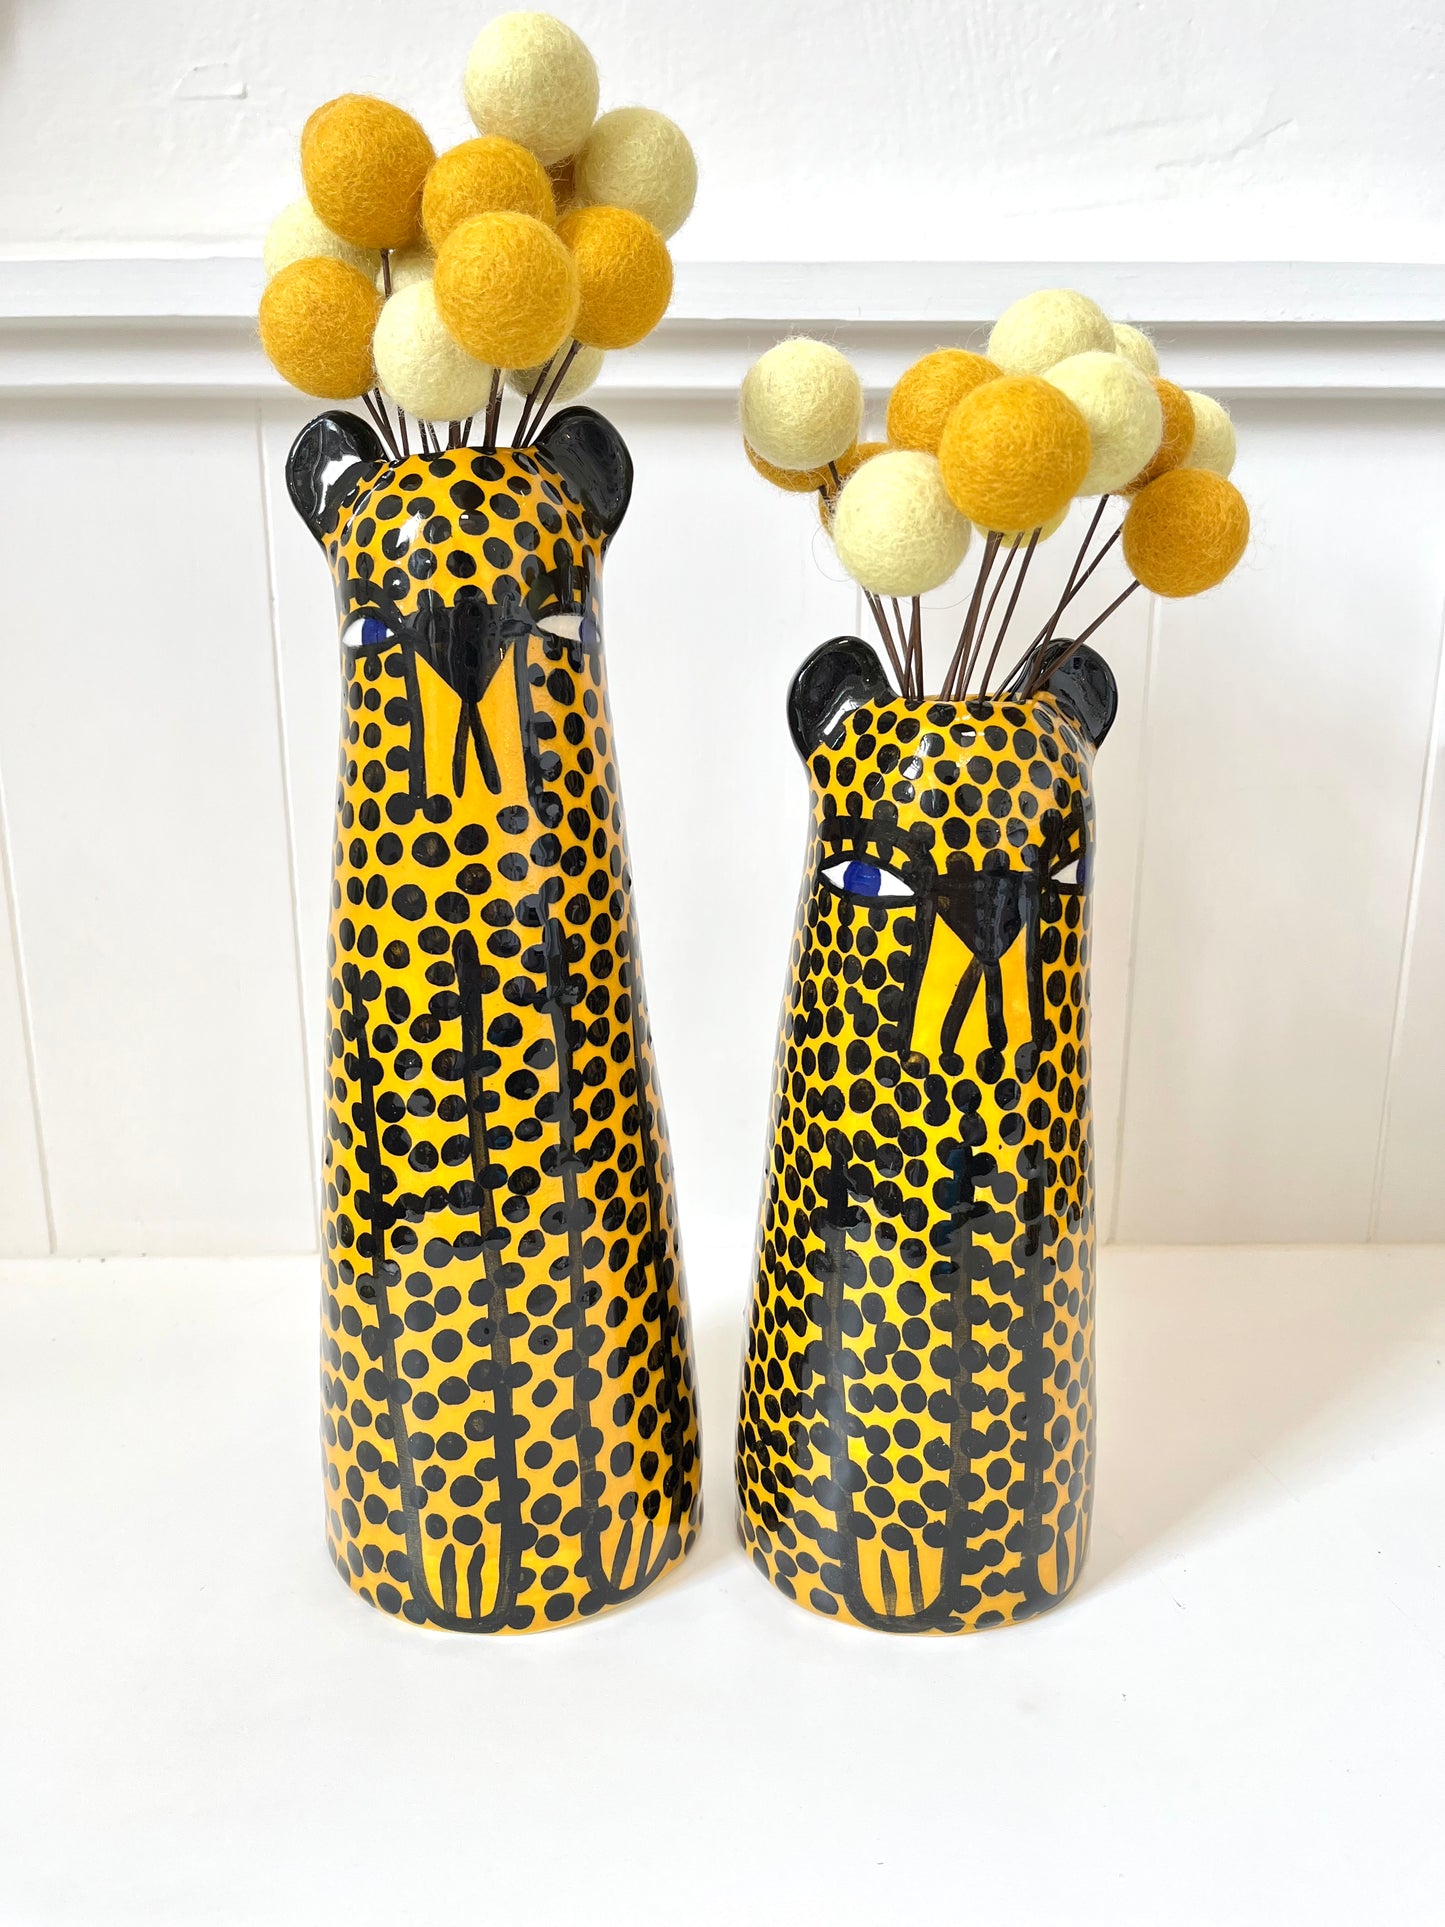 Yellow Cheetah Vase by Studio Soph